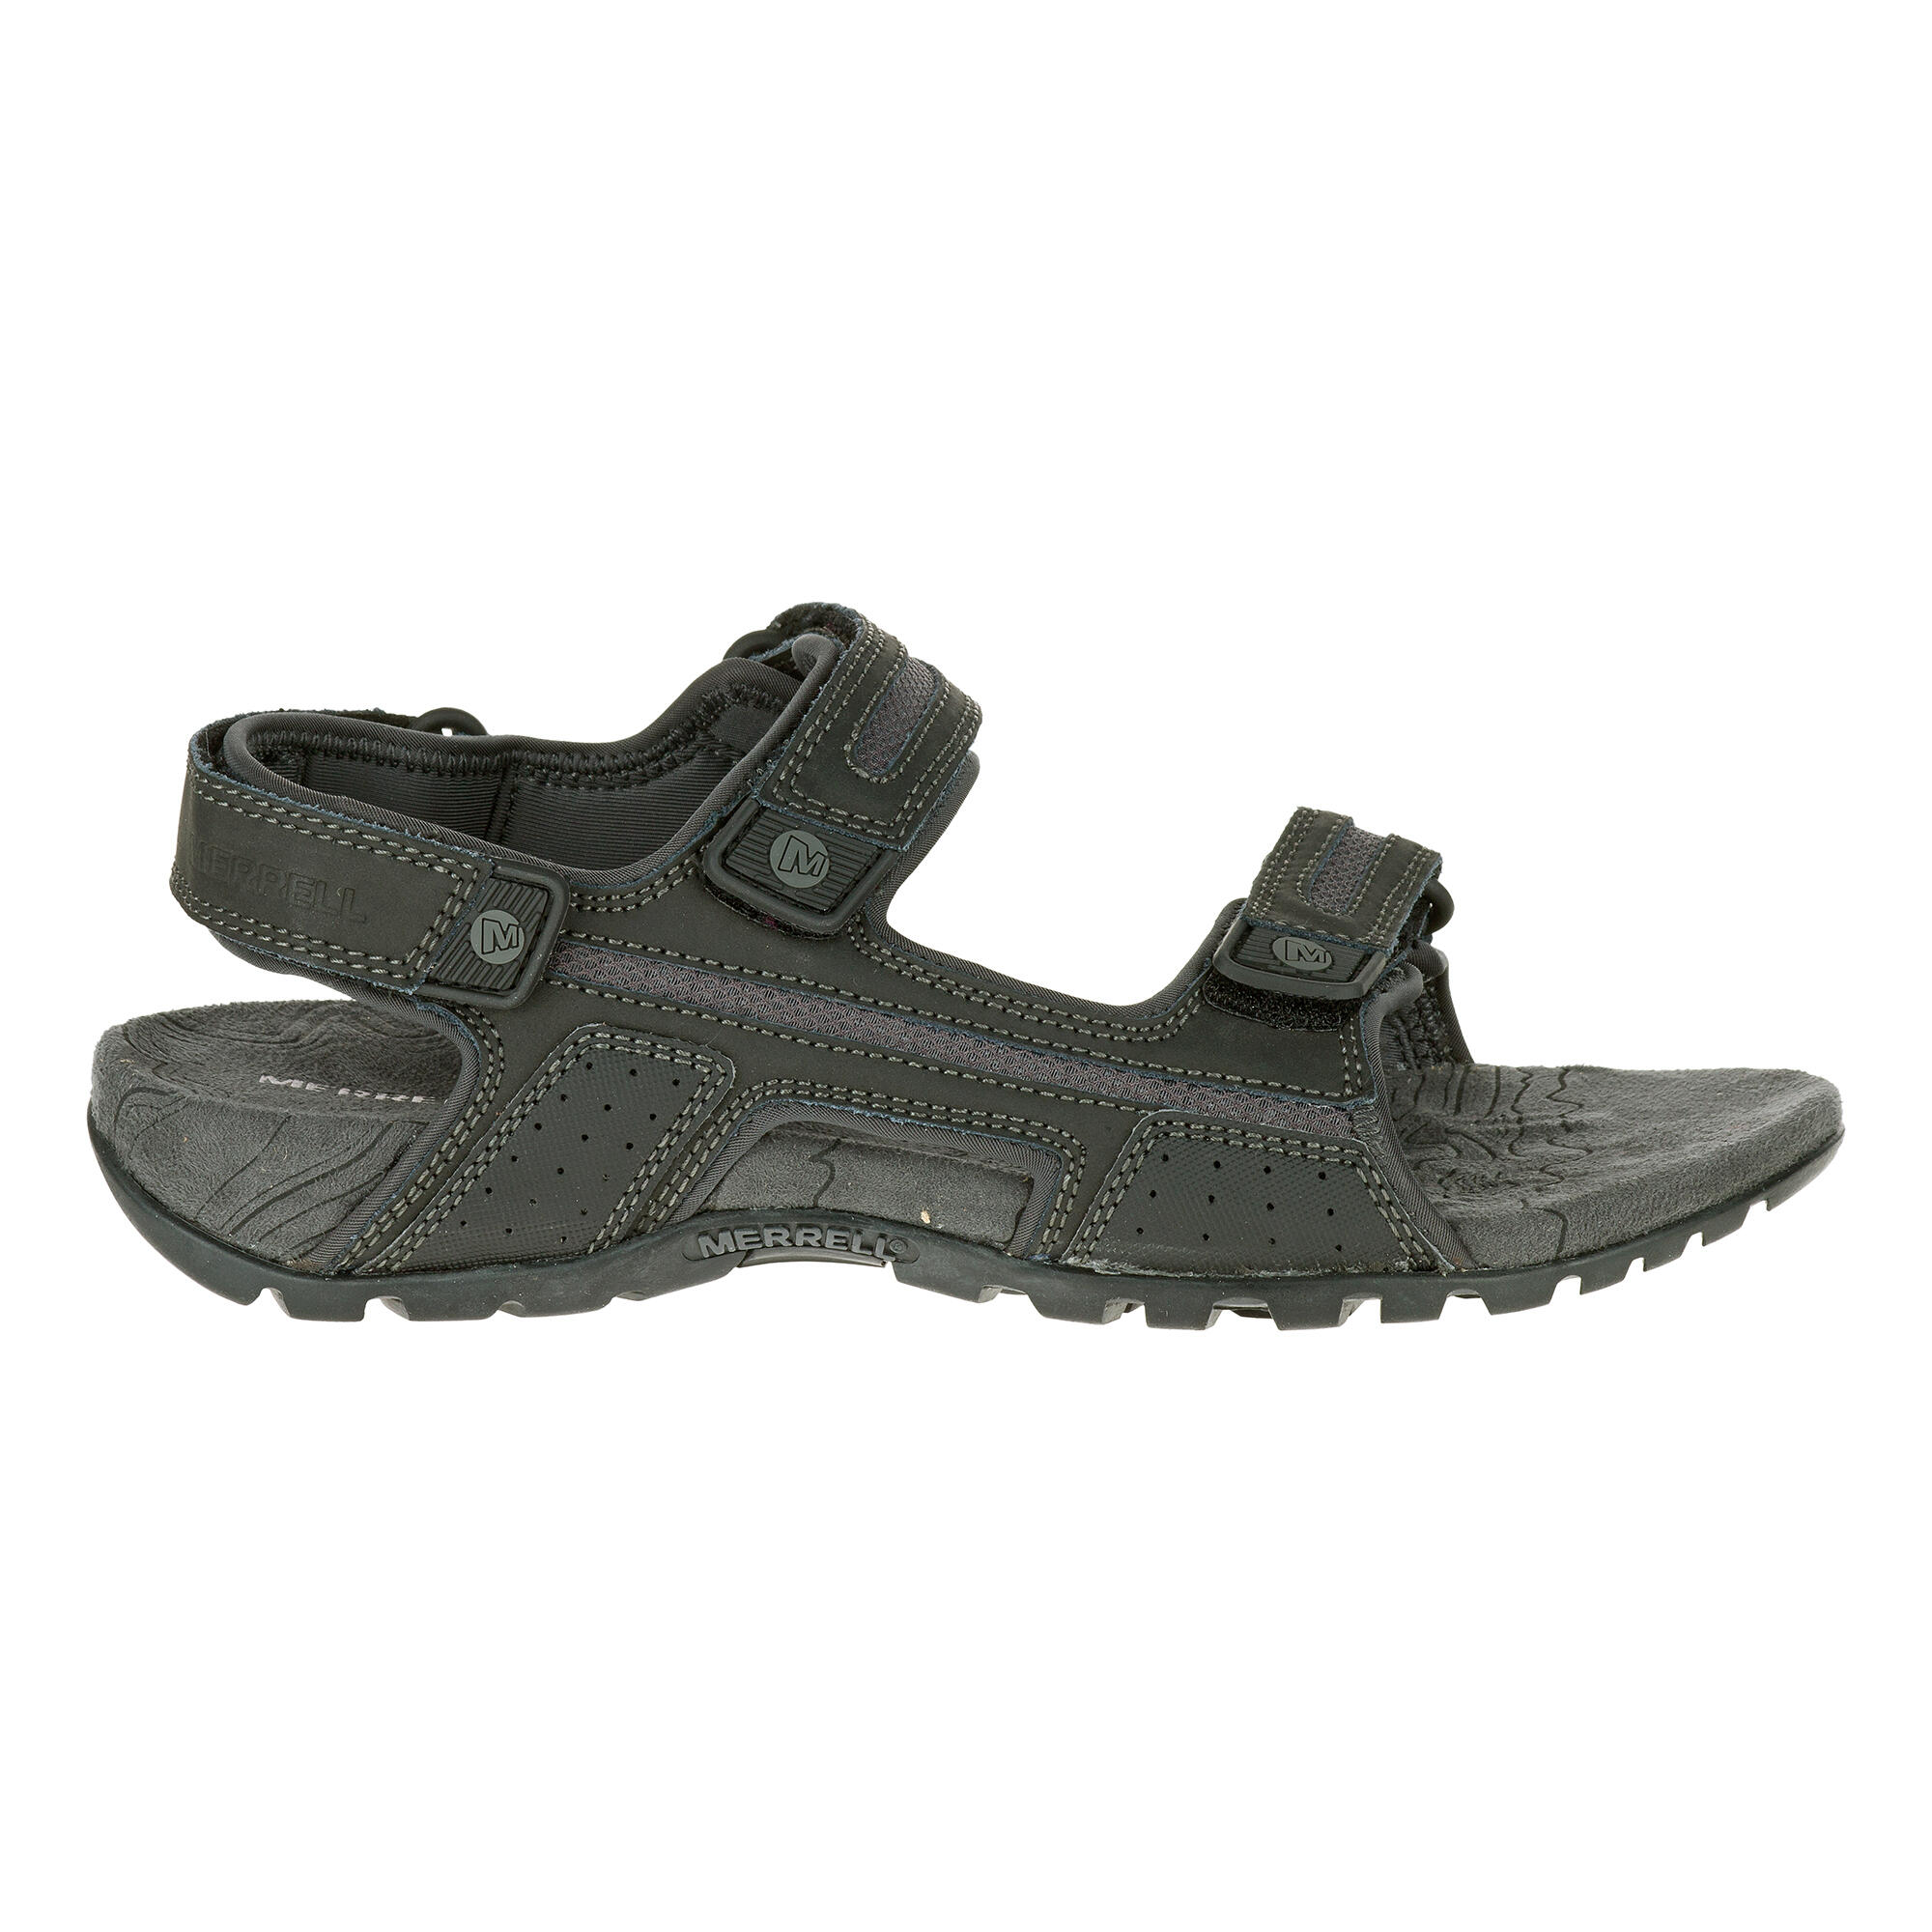 Men's walking sandals - Merrell Sandspur - Black 5/8